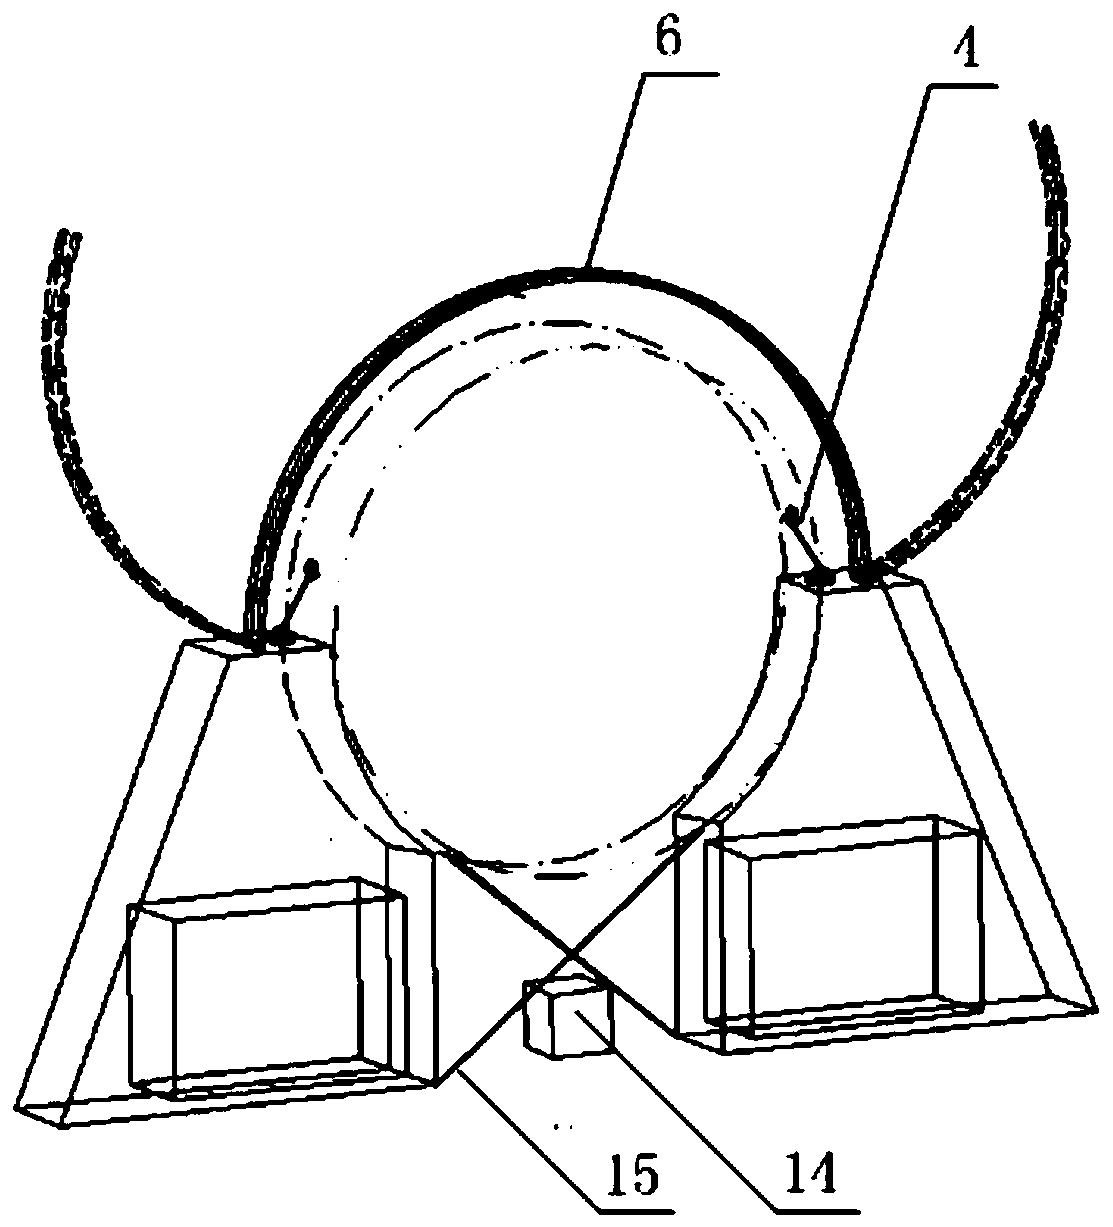 A captive balloon anchoring platform and a use method